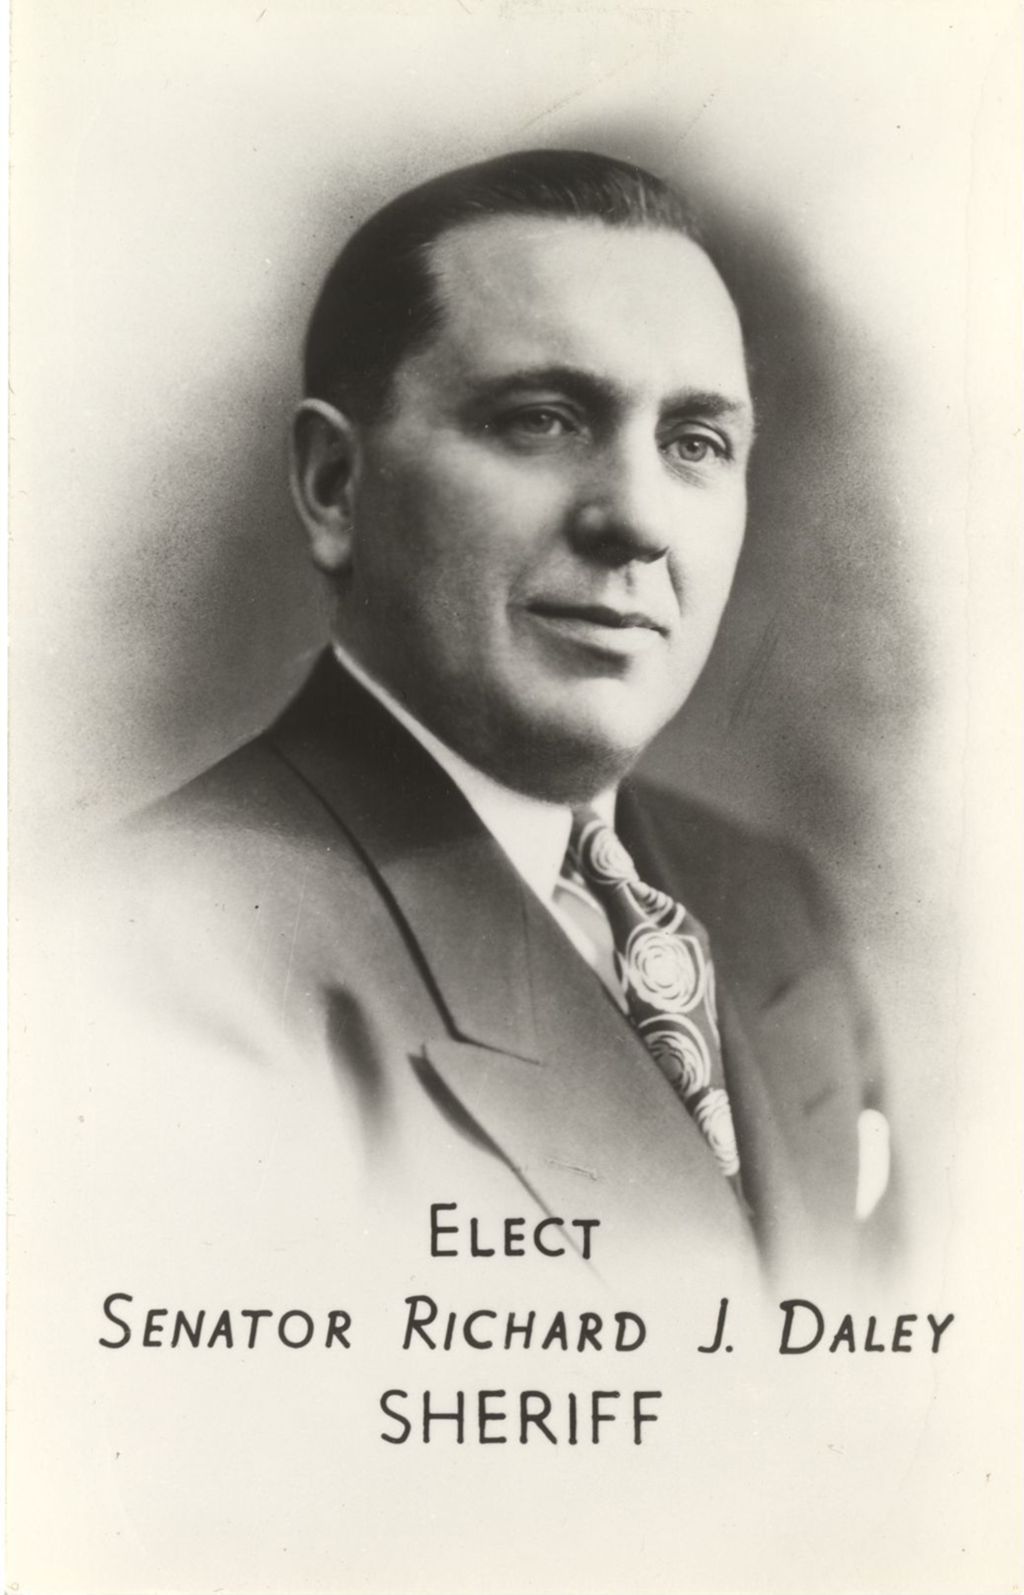 Miniature of Sheriff election photo card